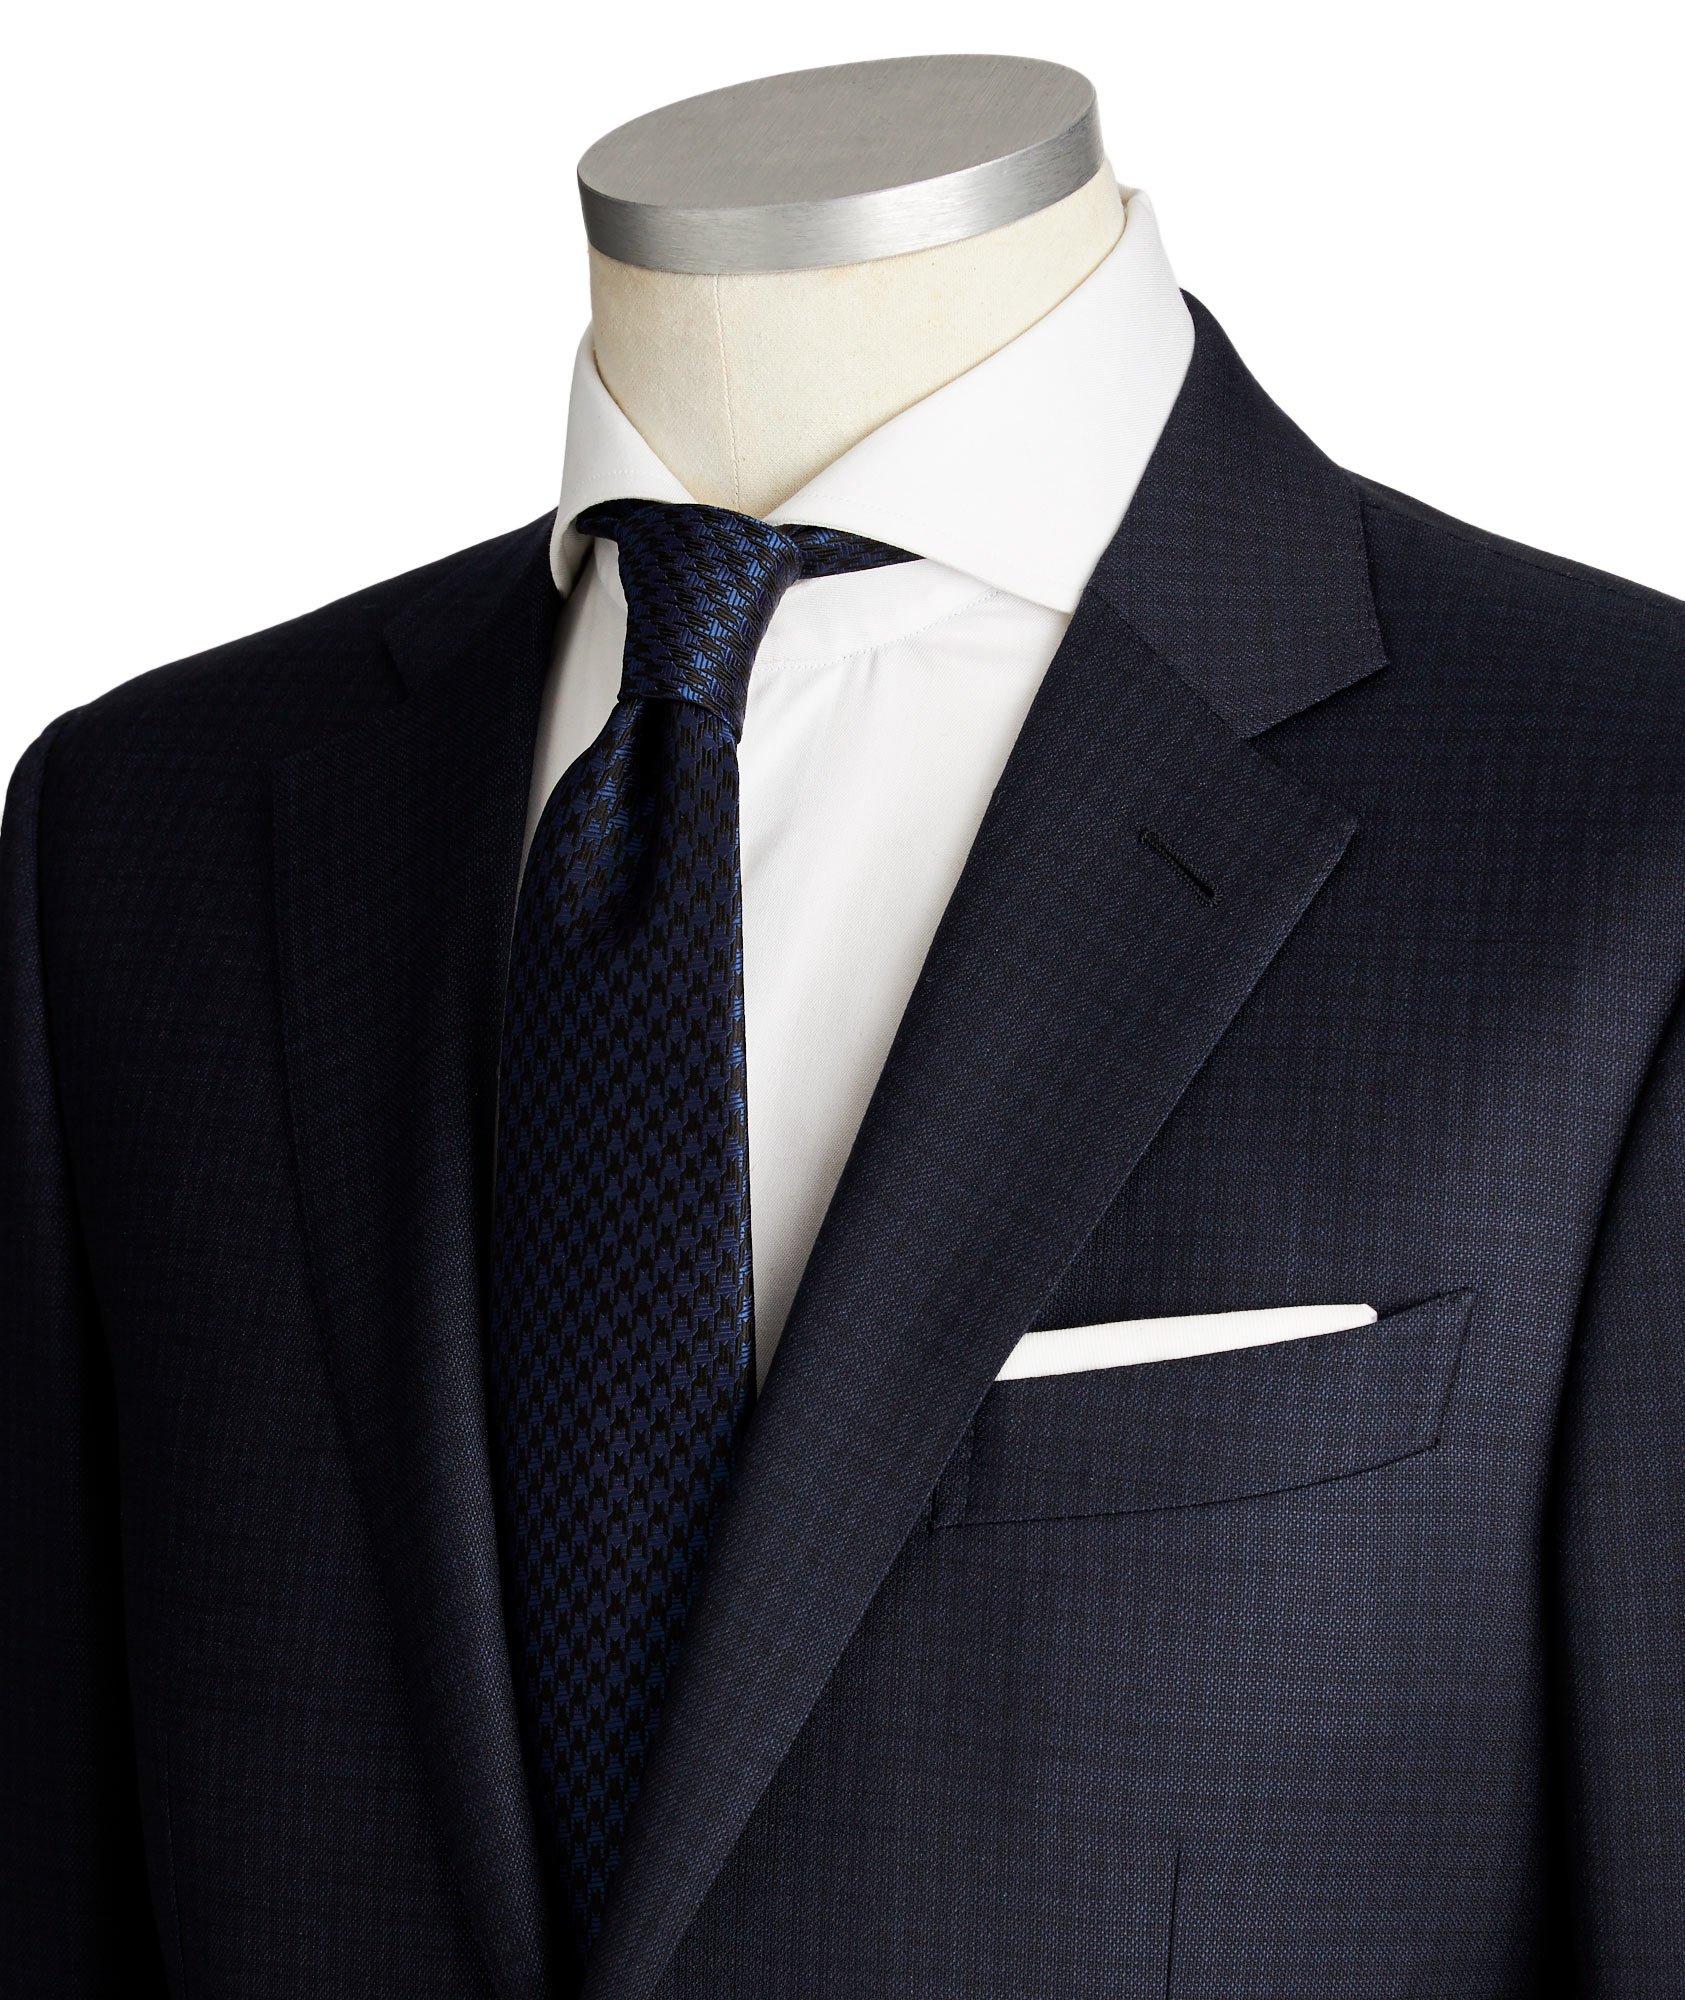 Milano Multi-Season Suit image 1